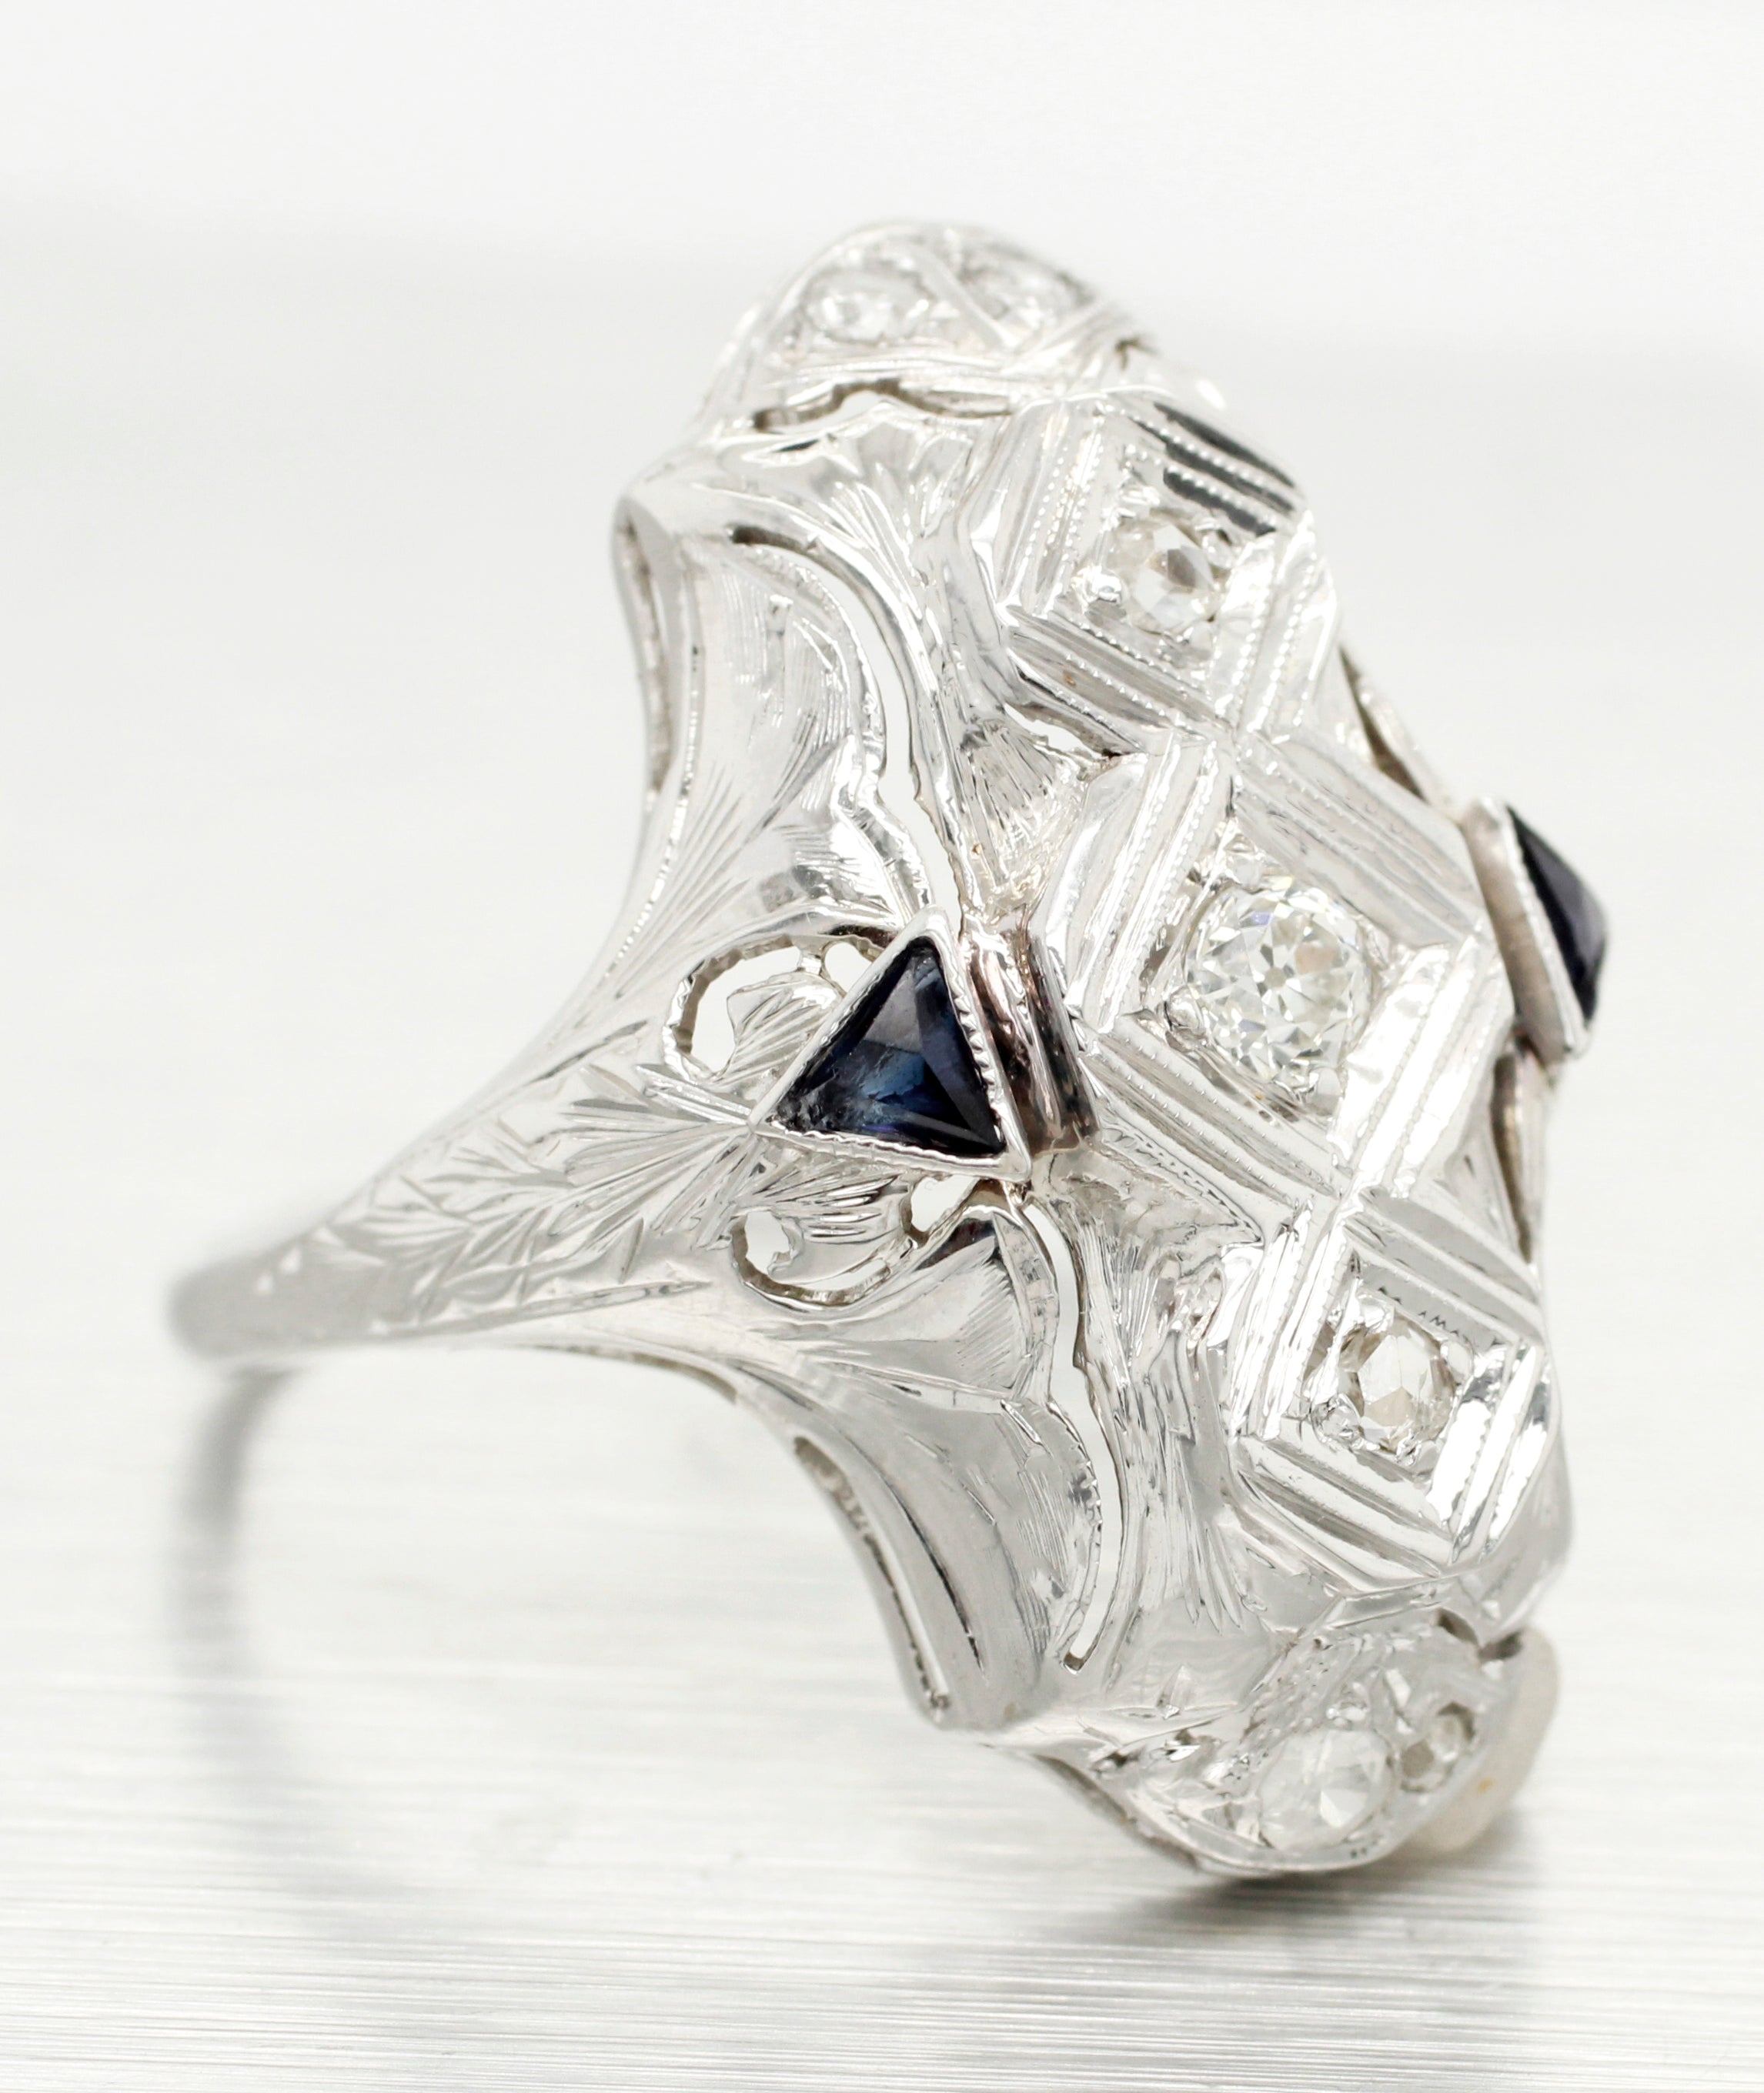 Antique Art Deco 0.40ctw Diamond & Sapphire Cocktail Ring in 18k White Gold